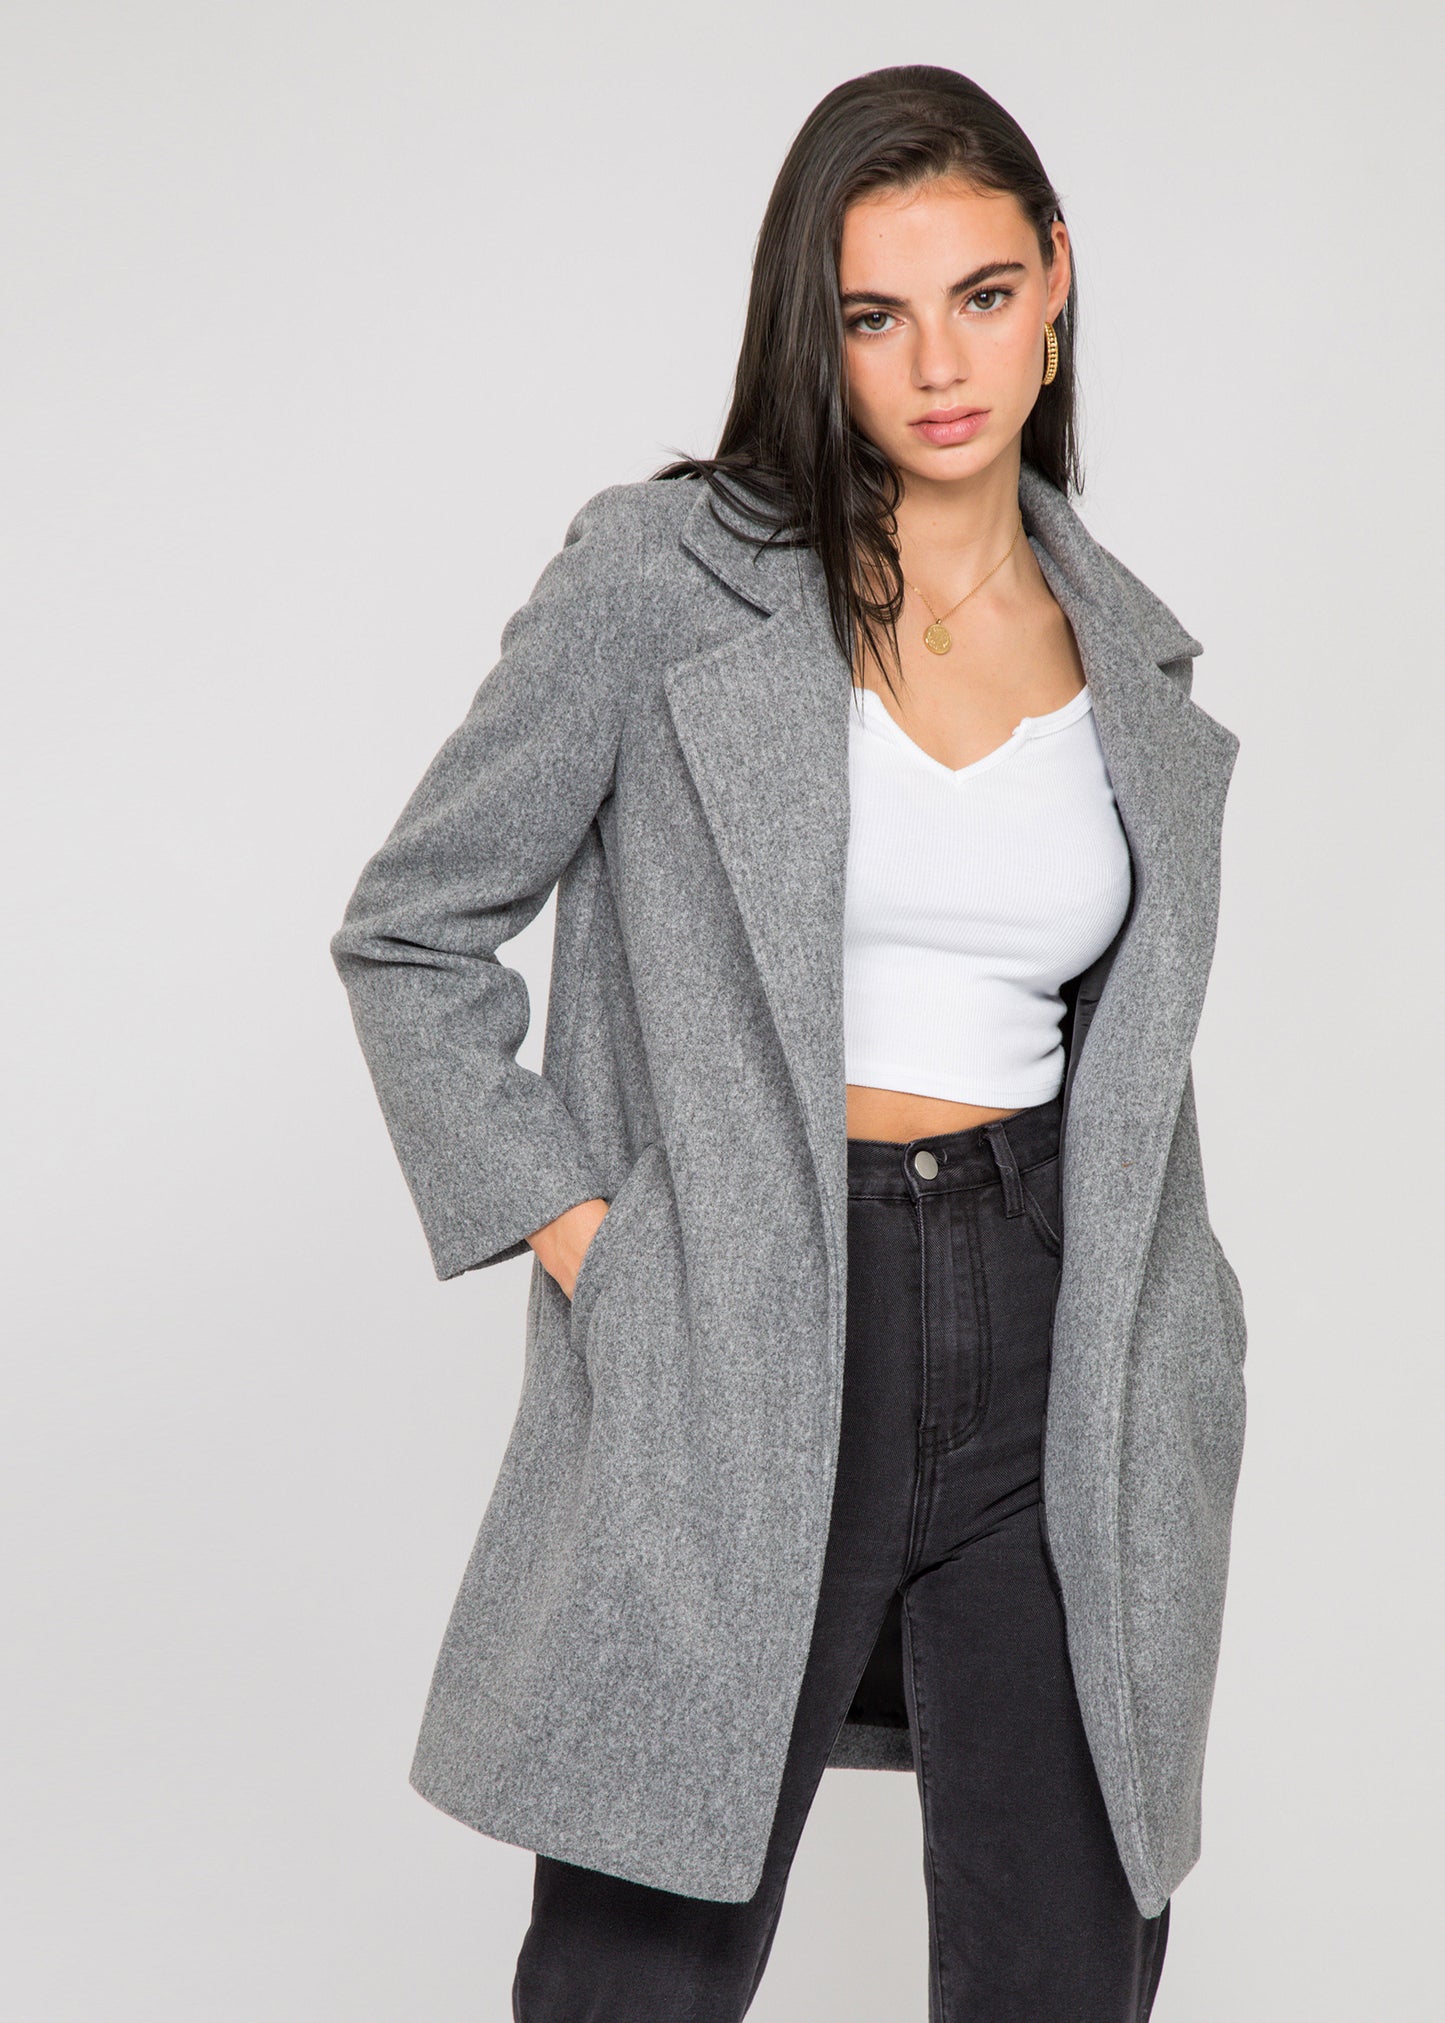 Tailored coat in grey